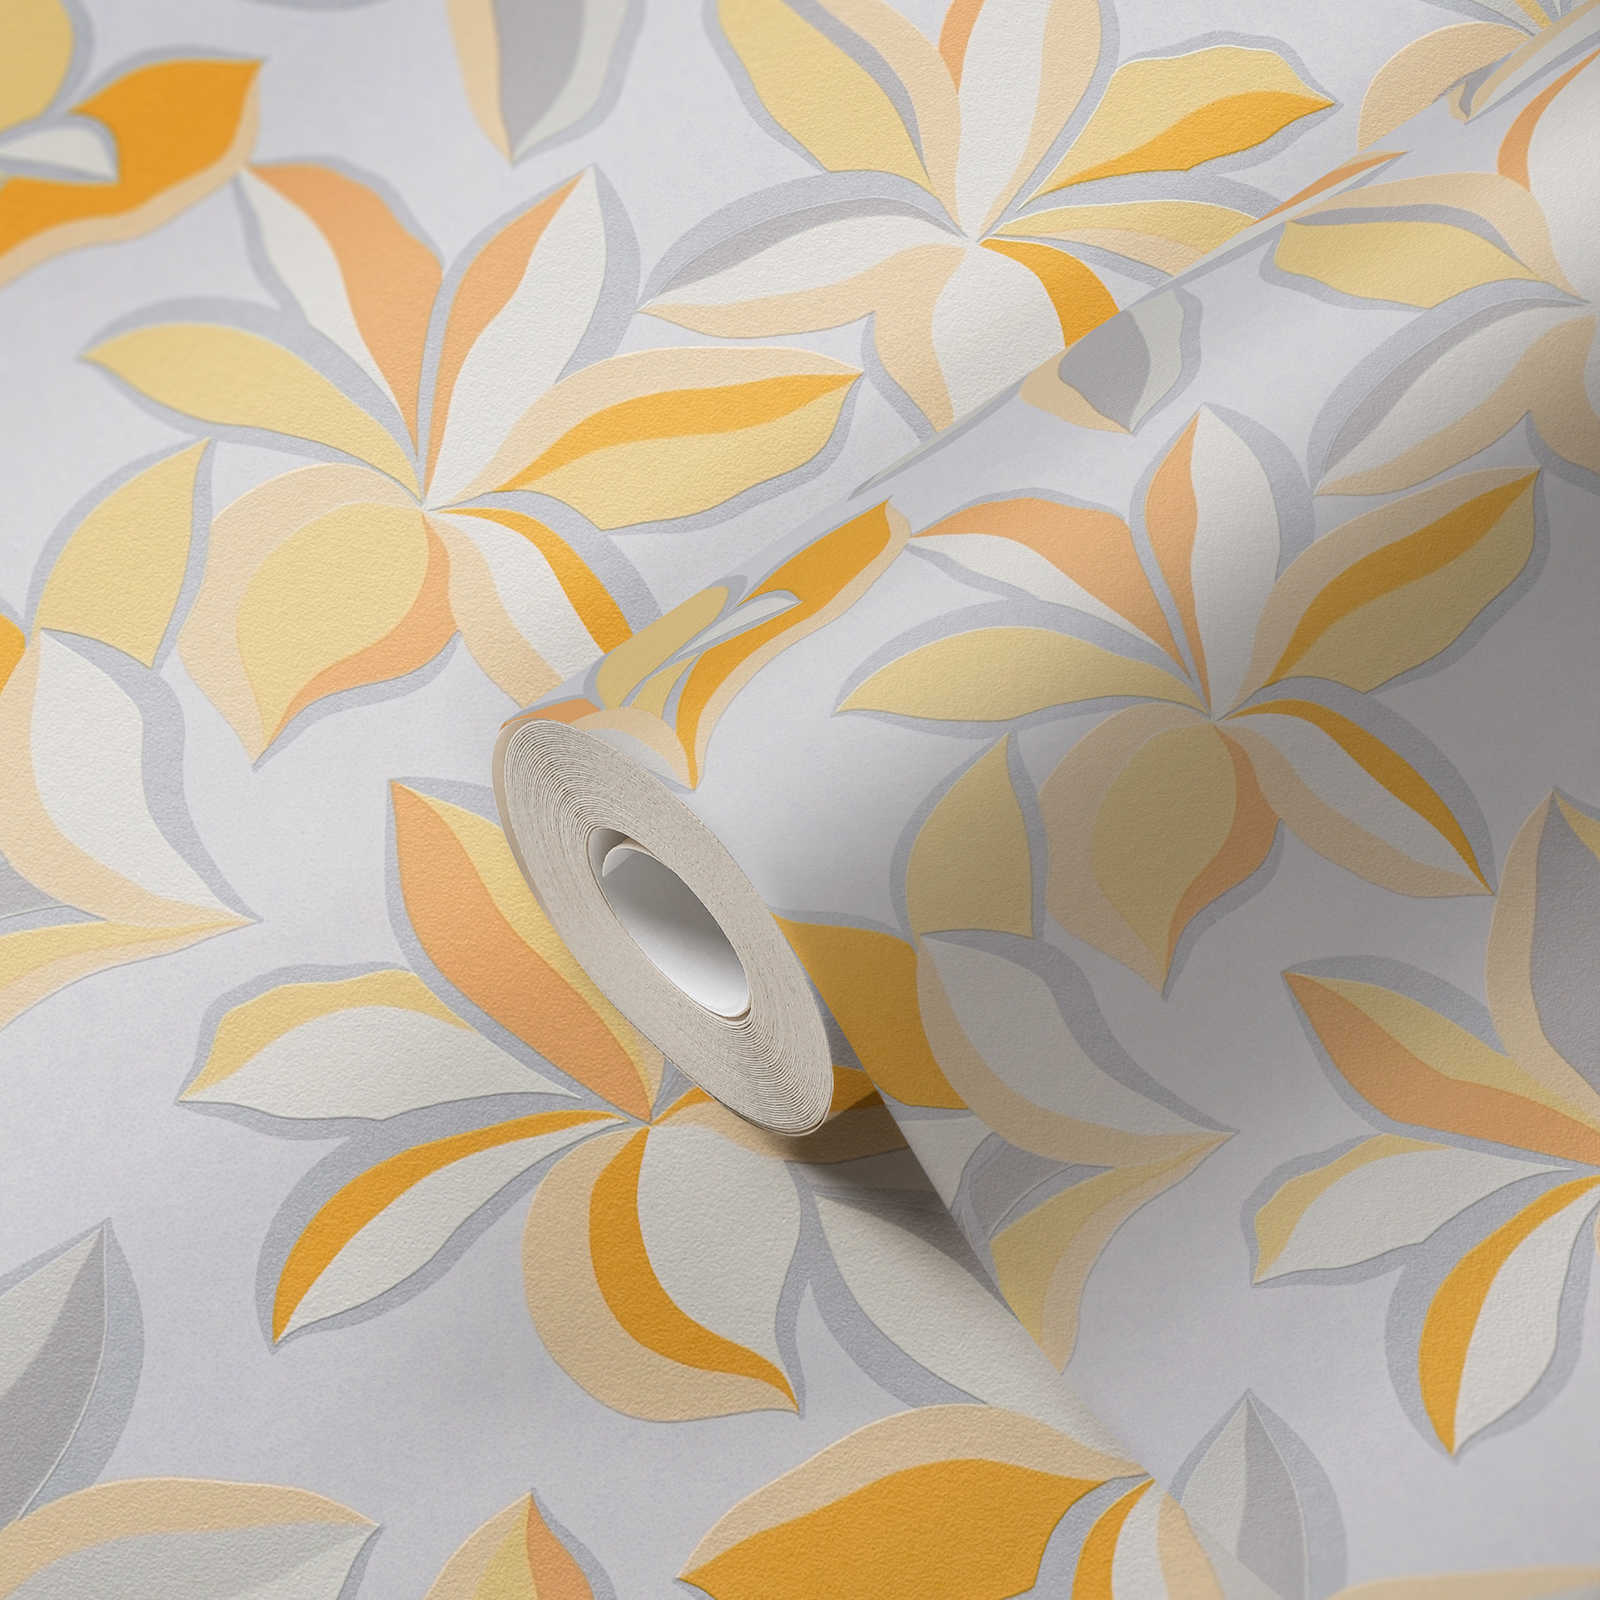             Vliestapete mit Blumenmuster & Metallic-Look – Gelb, Orange, Grau
        